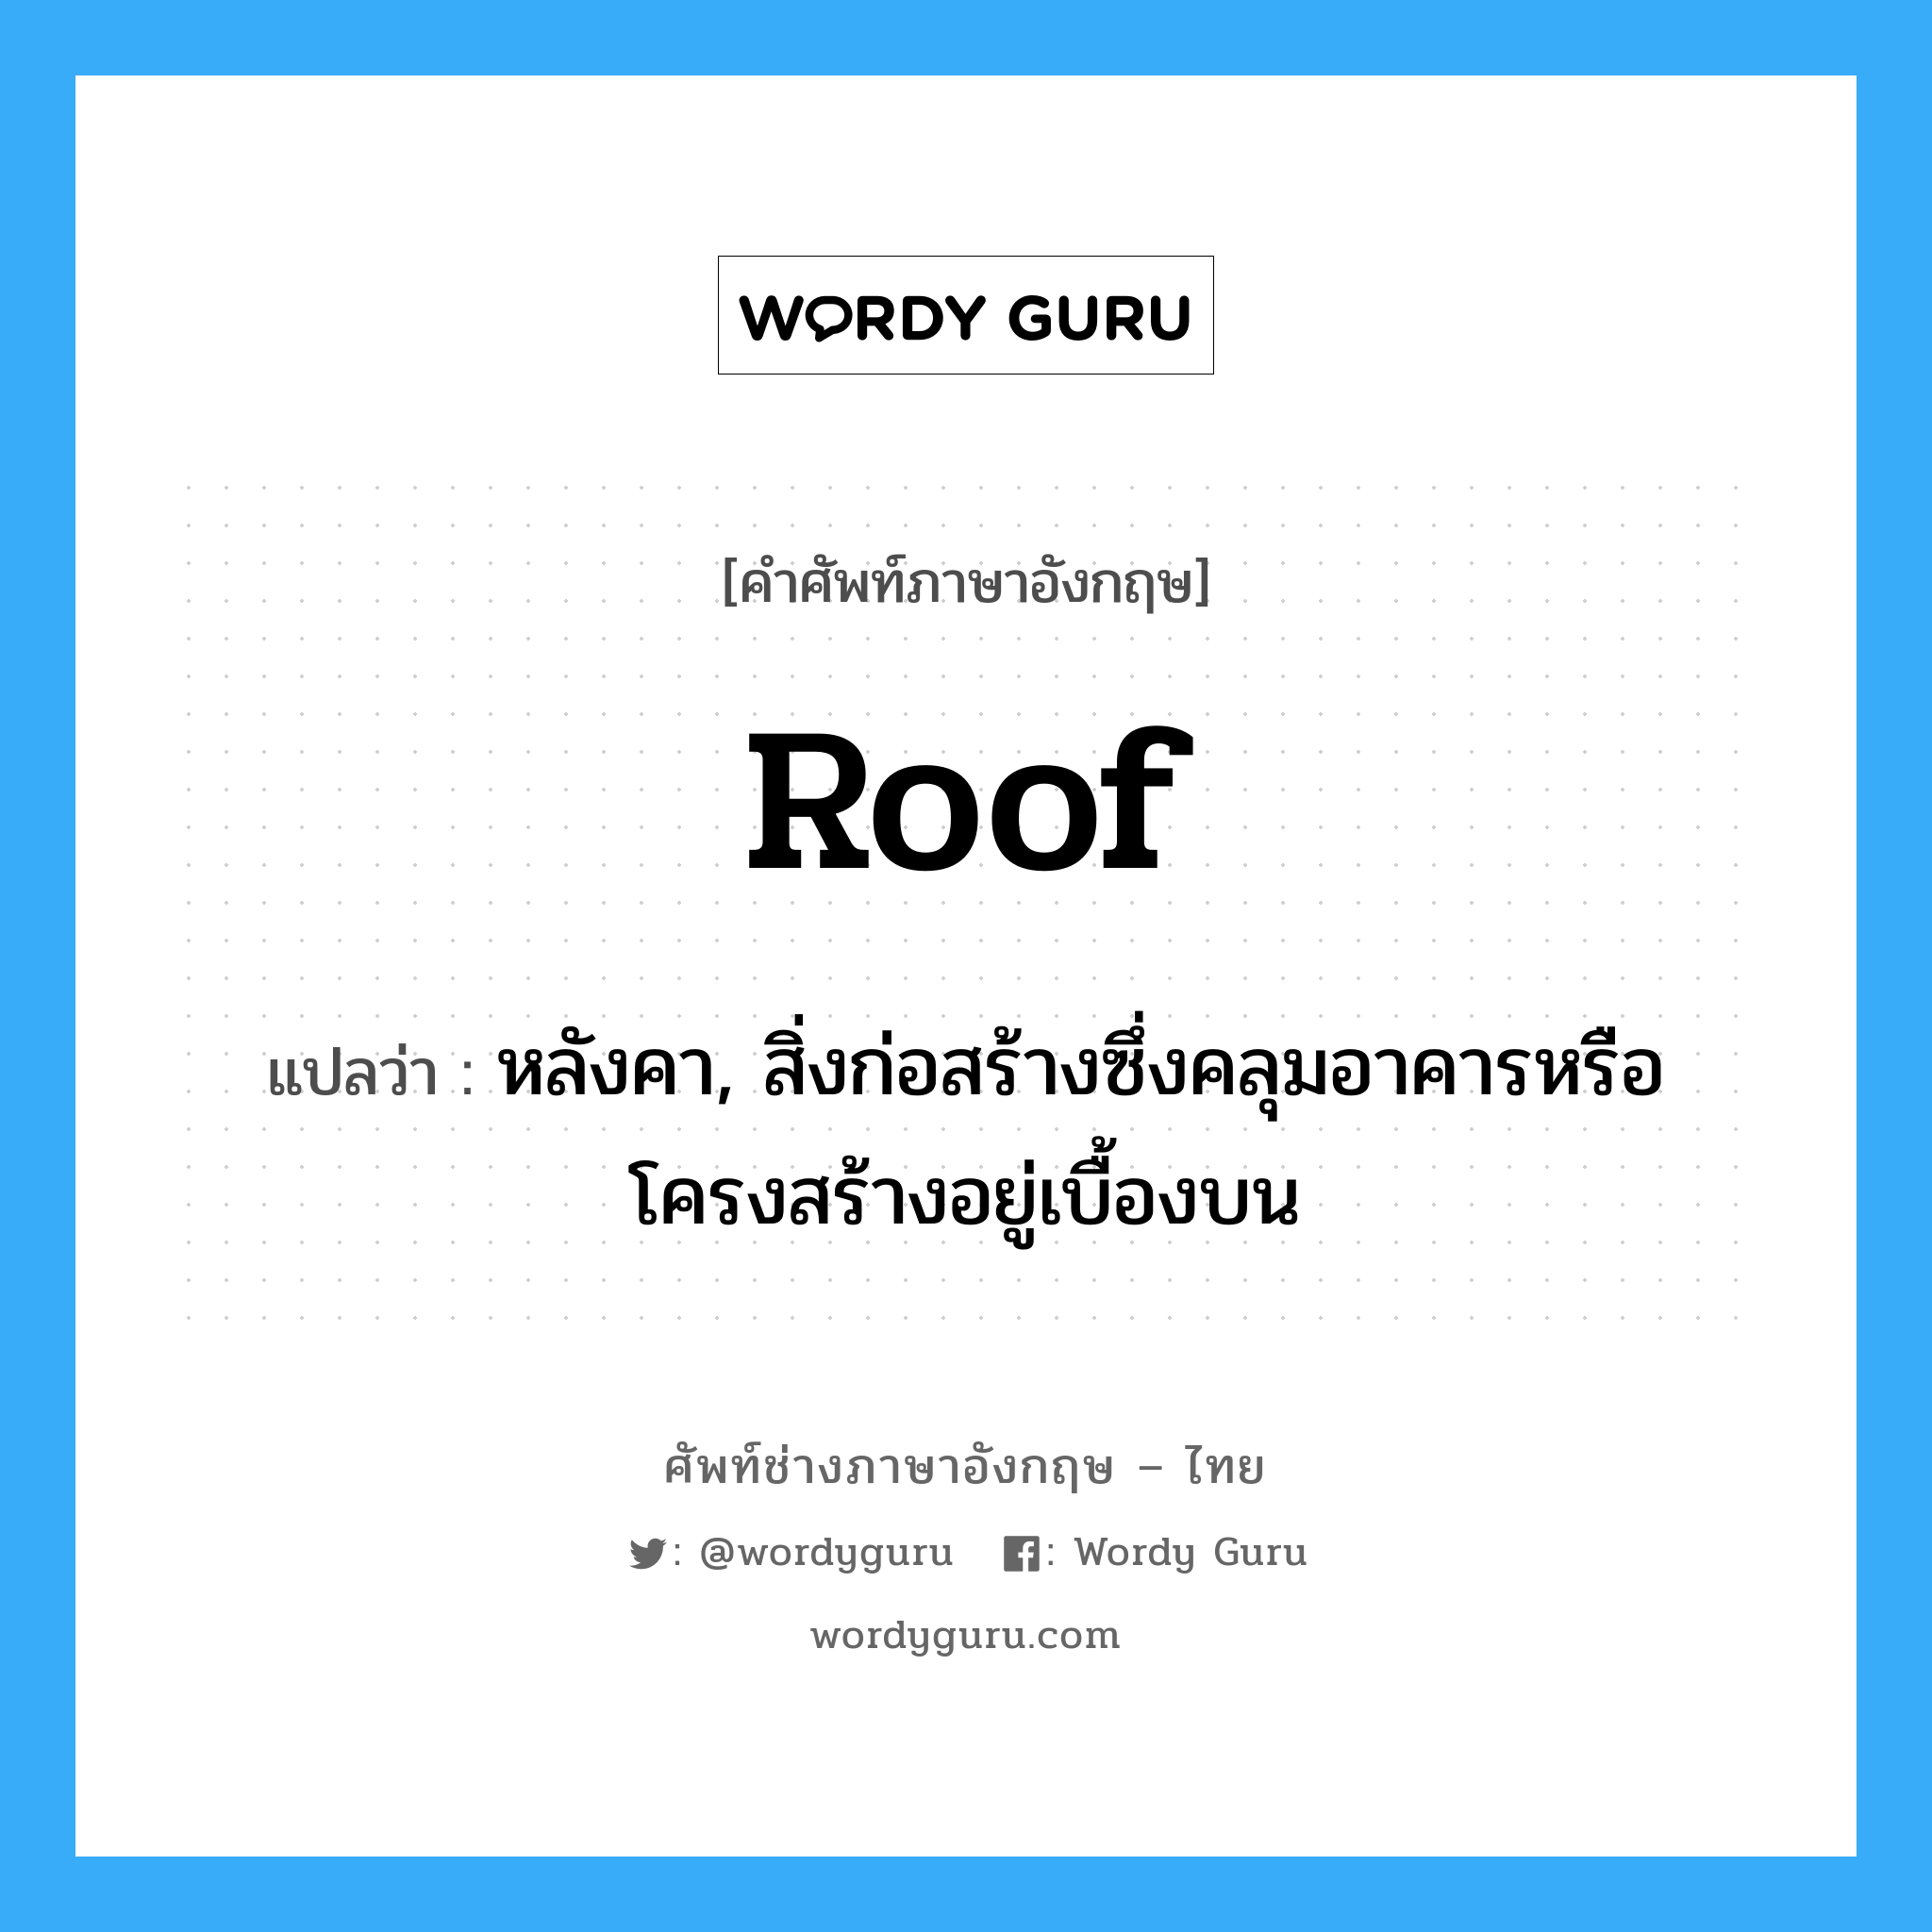 roof แปลว่า?, คำศัพท์ช่างภาษาอังกฤษ - ไทย roof คำศัพท์ภาษาอังกฤษ roof แปลว่า หลังคา, สิ่งก่อสร้างซึ่งคลุมอาคารหรือโครงสร้างอยู่เบื้องบน